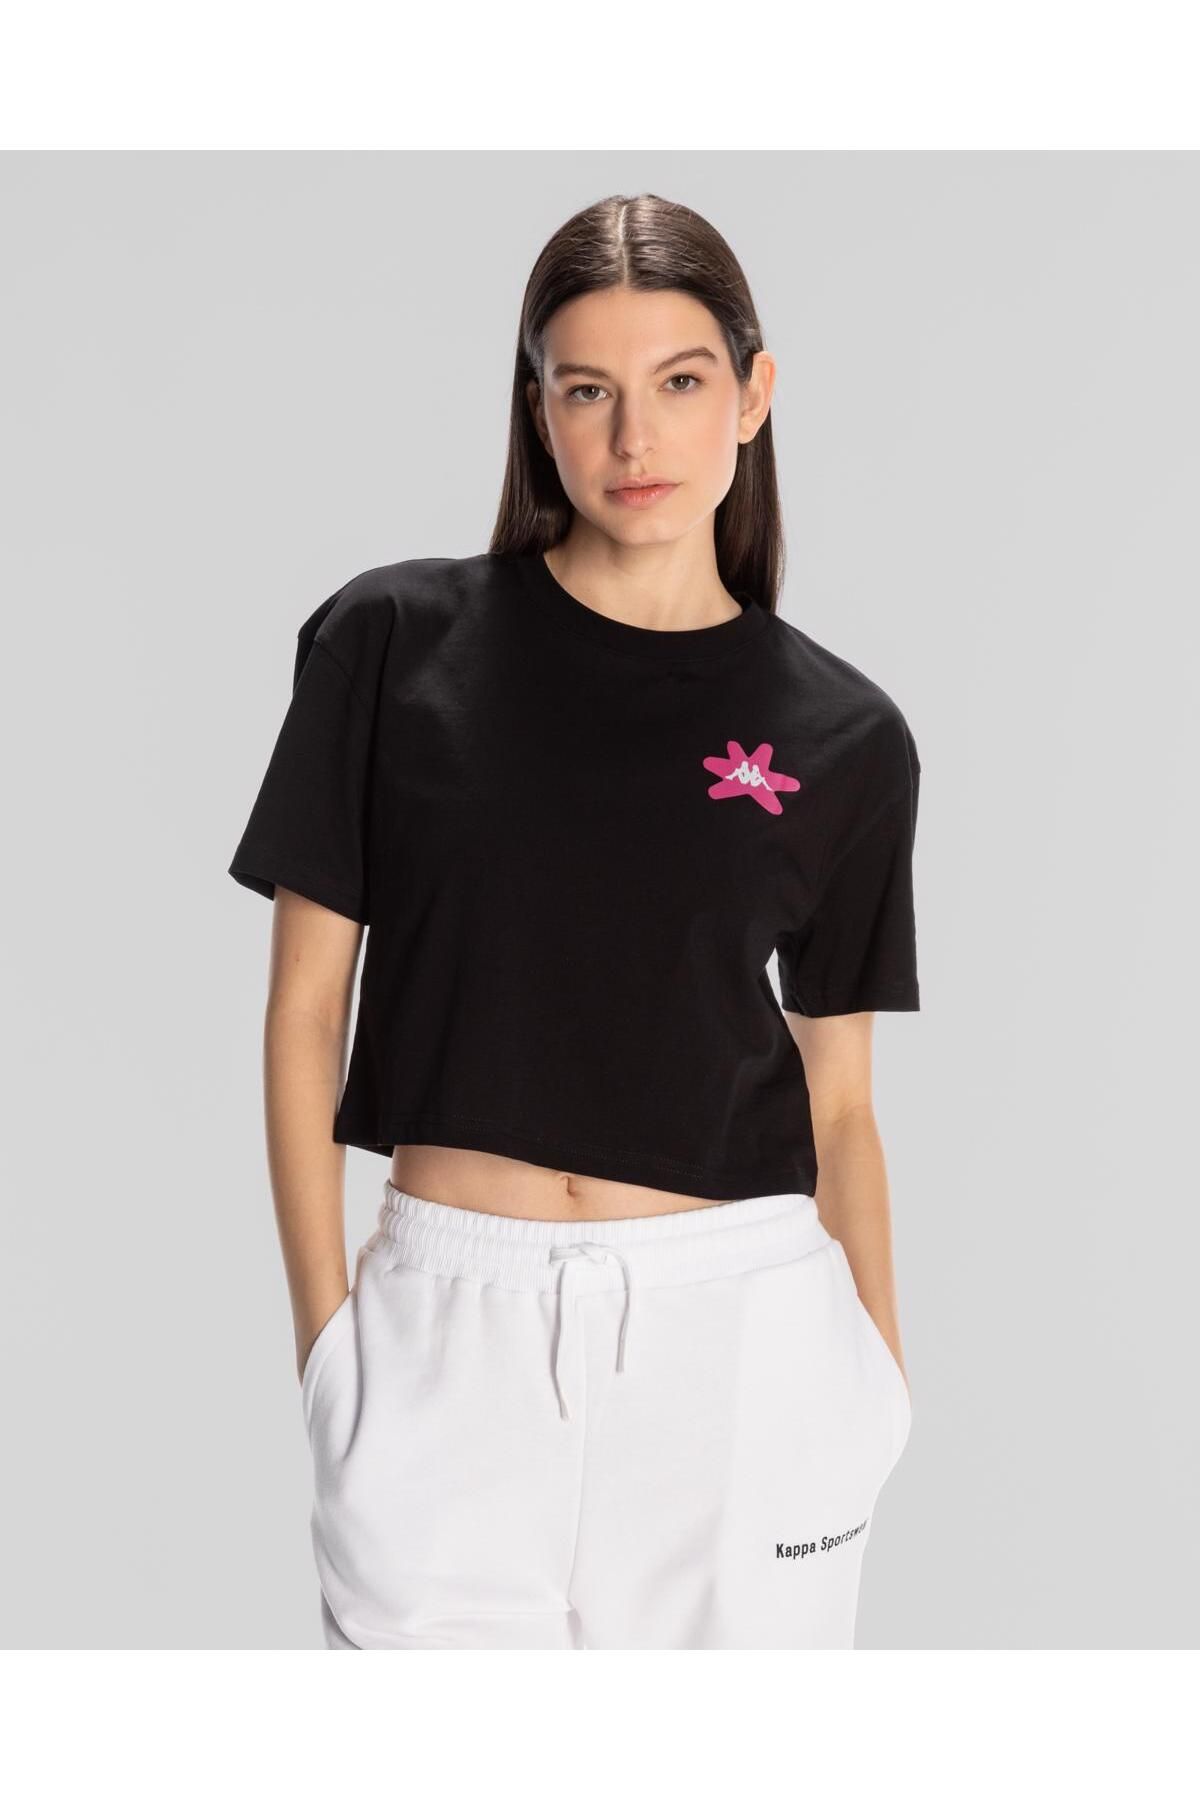 Kappa Authentic Hannah T-shirt Kadın Siyah Regular Fit Tişört